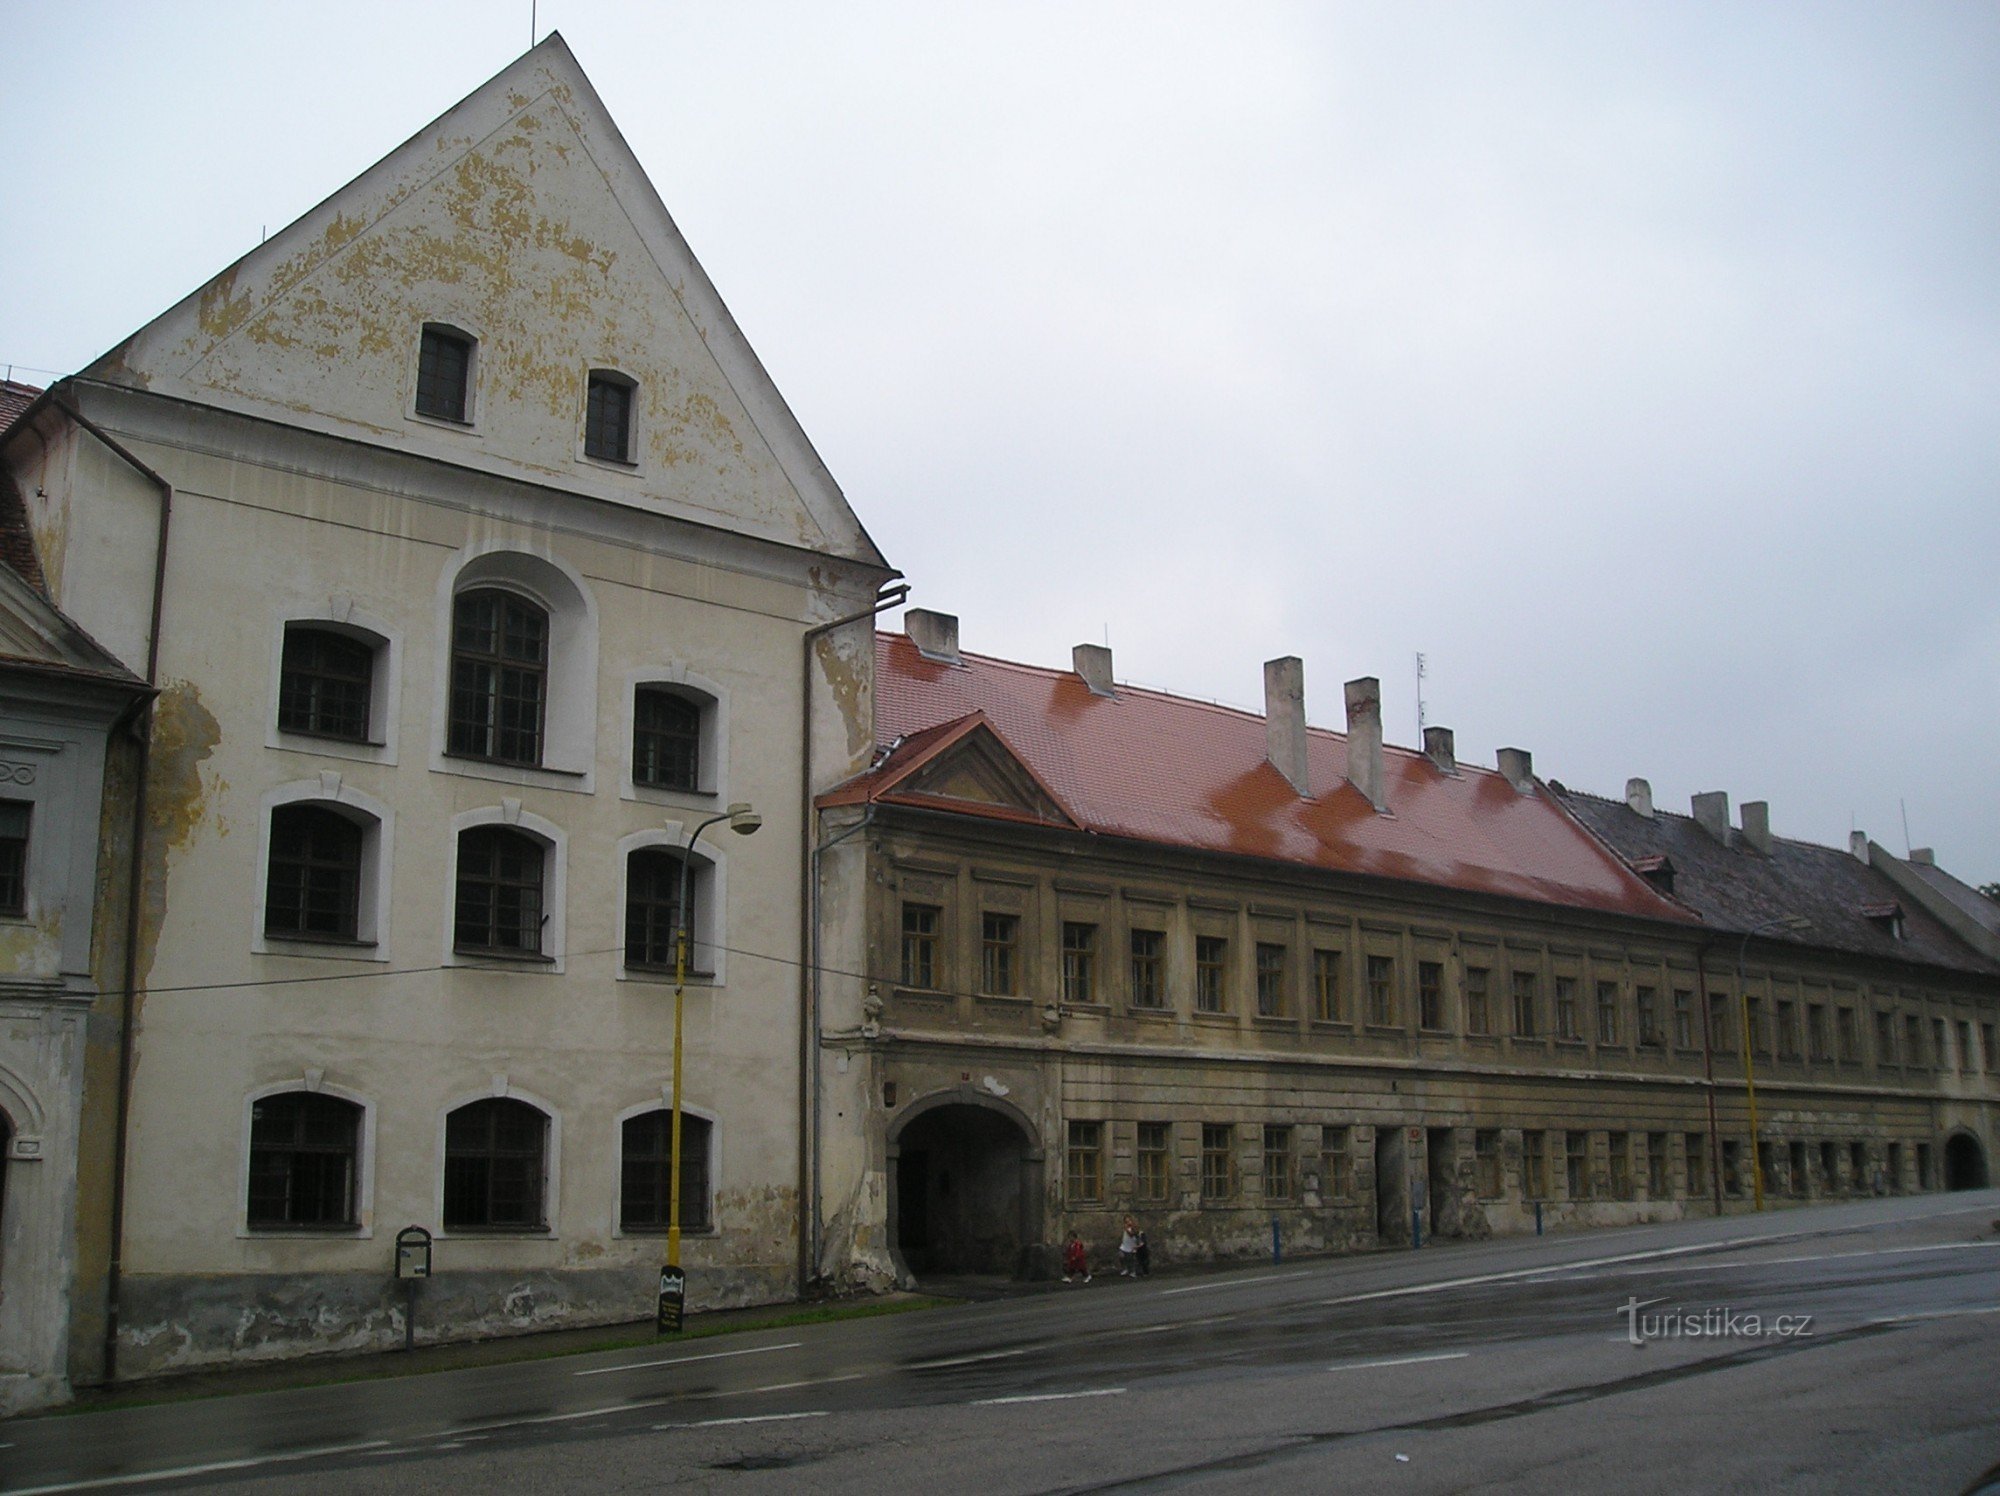 Samostanska tovarna